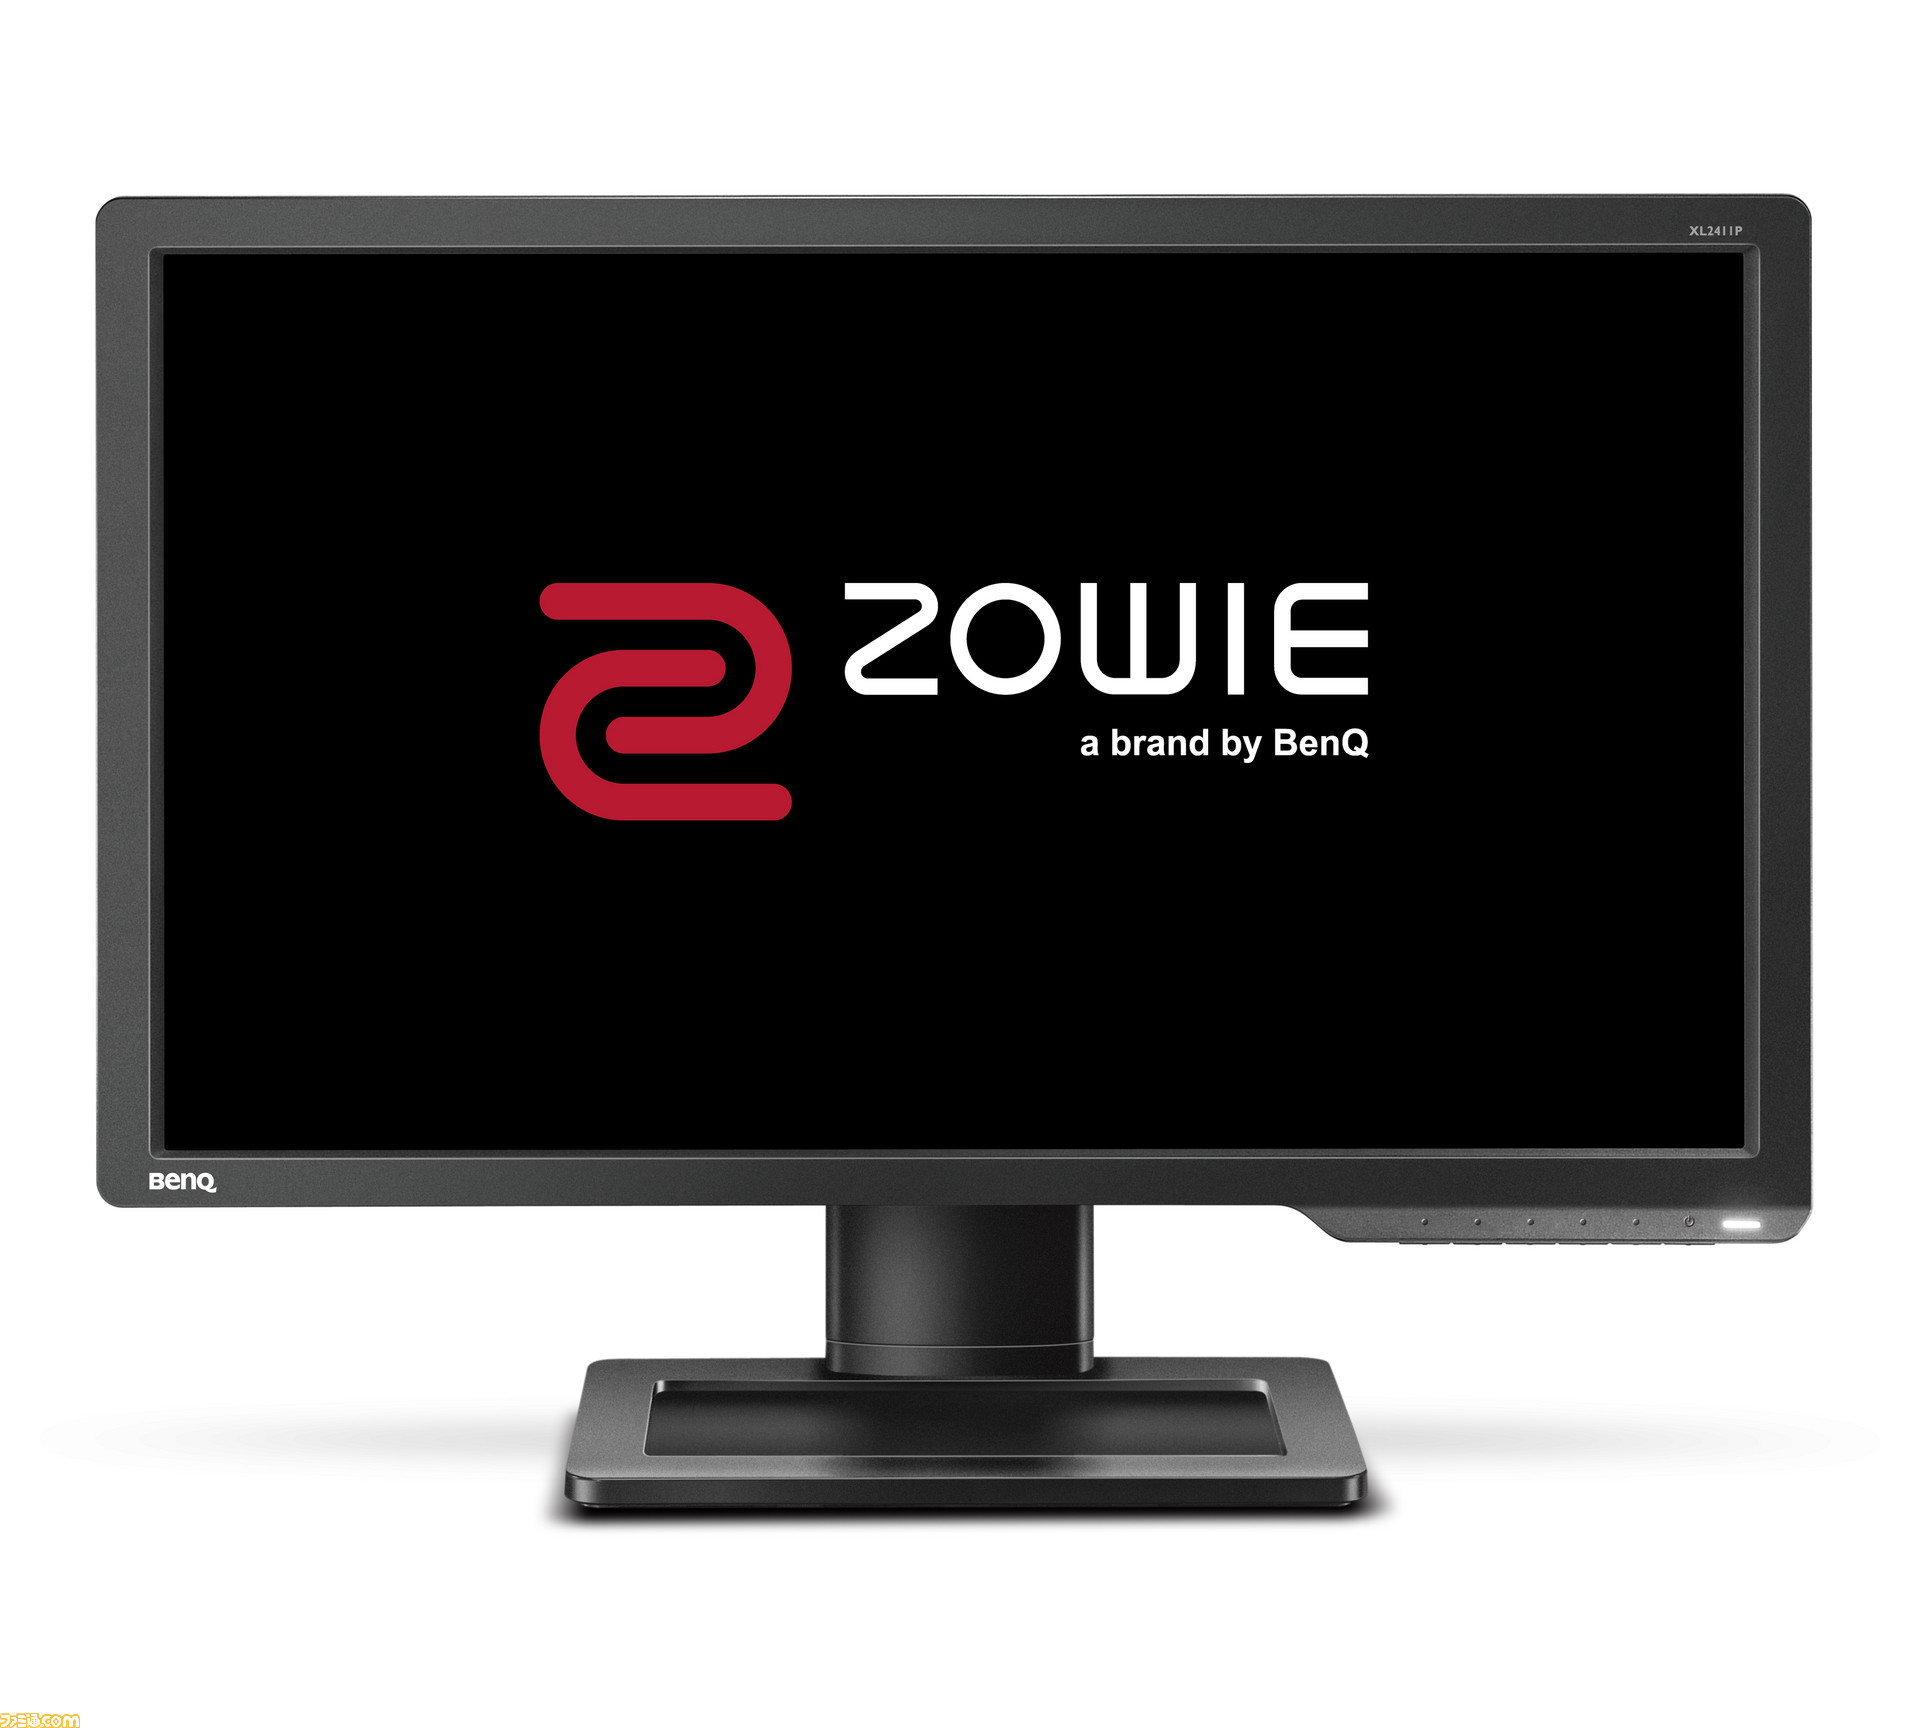 Fpsゲーム向け144hz対応のzowie24型ゲーミングディスプレイが12月21日発売 元プロゲーマーが設定するfpsモードを搭載 ファミ通 Com